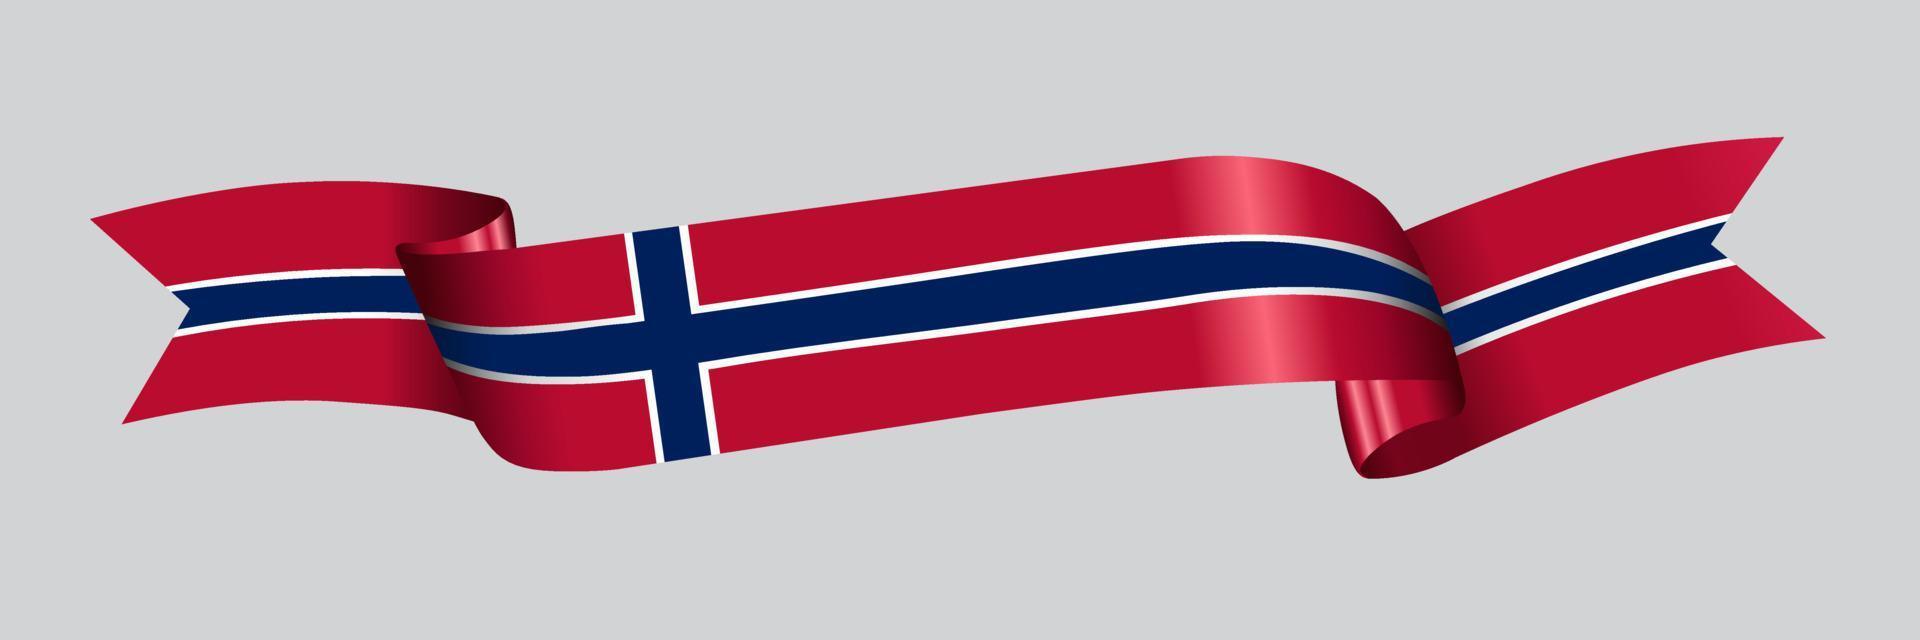 Bandeira 3D da Noruega na faixa de opções. vetor